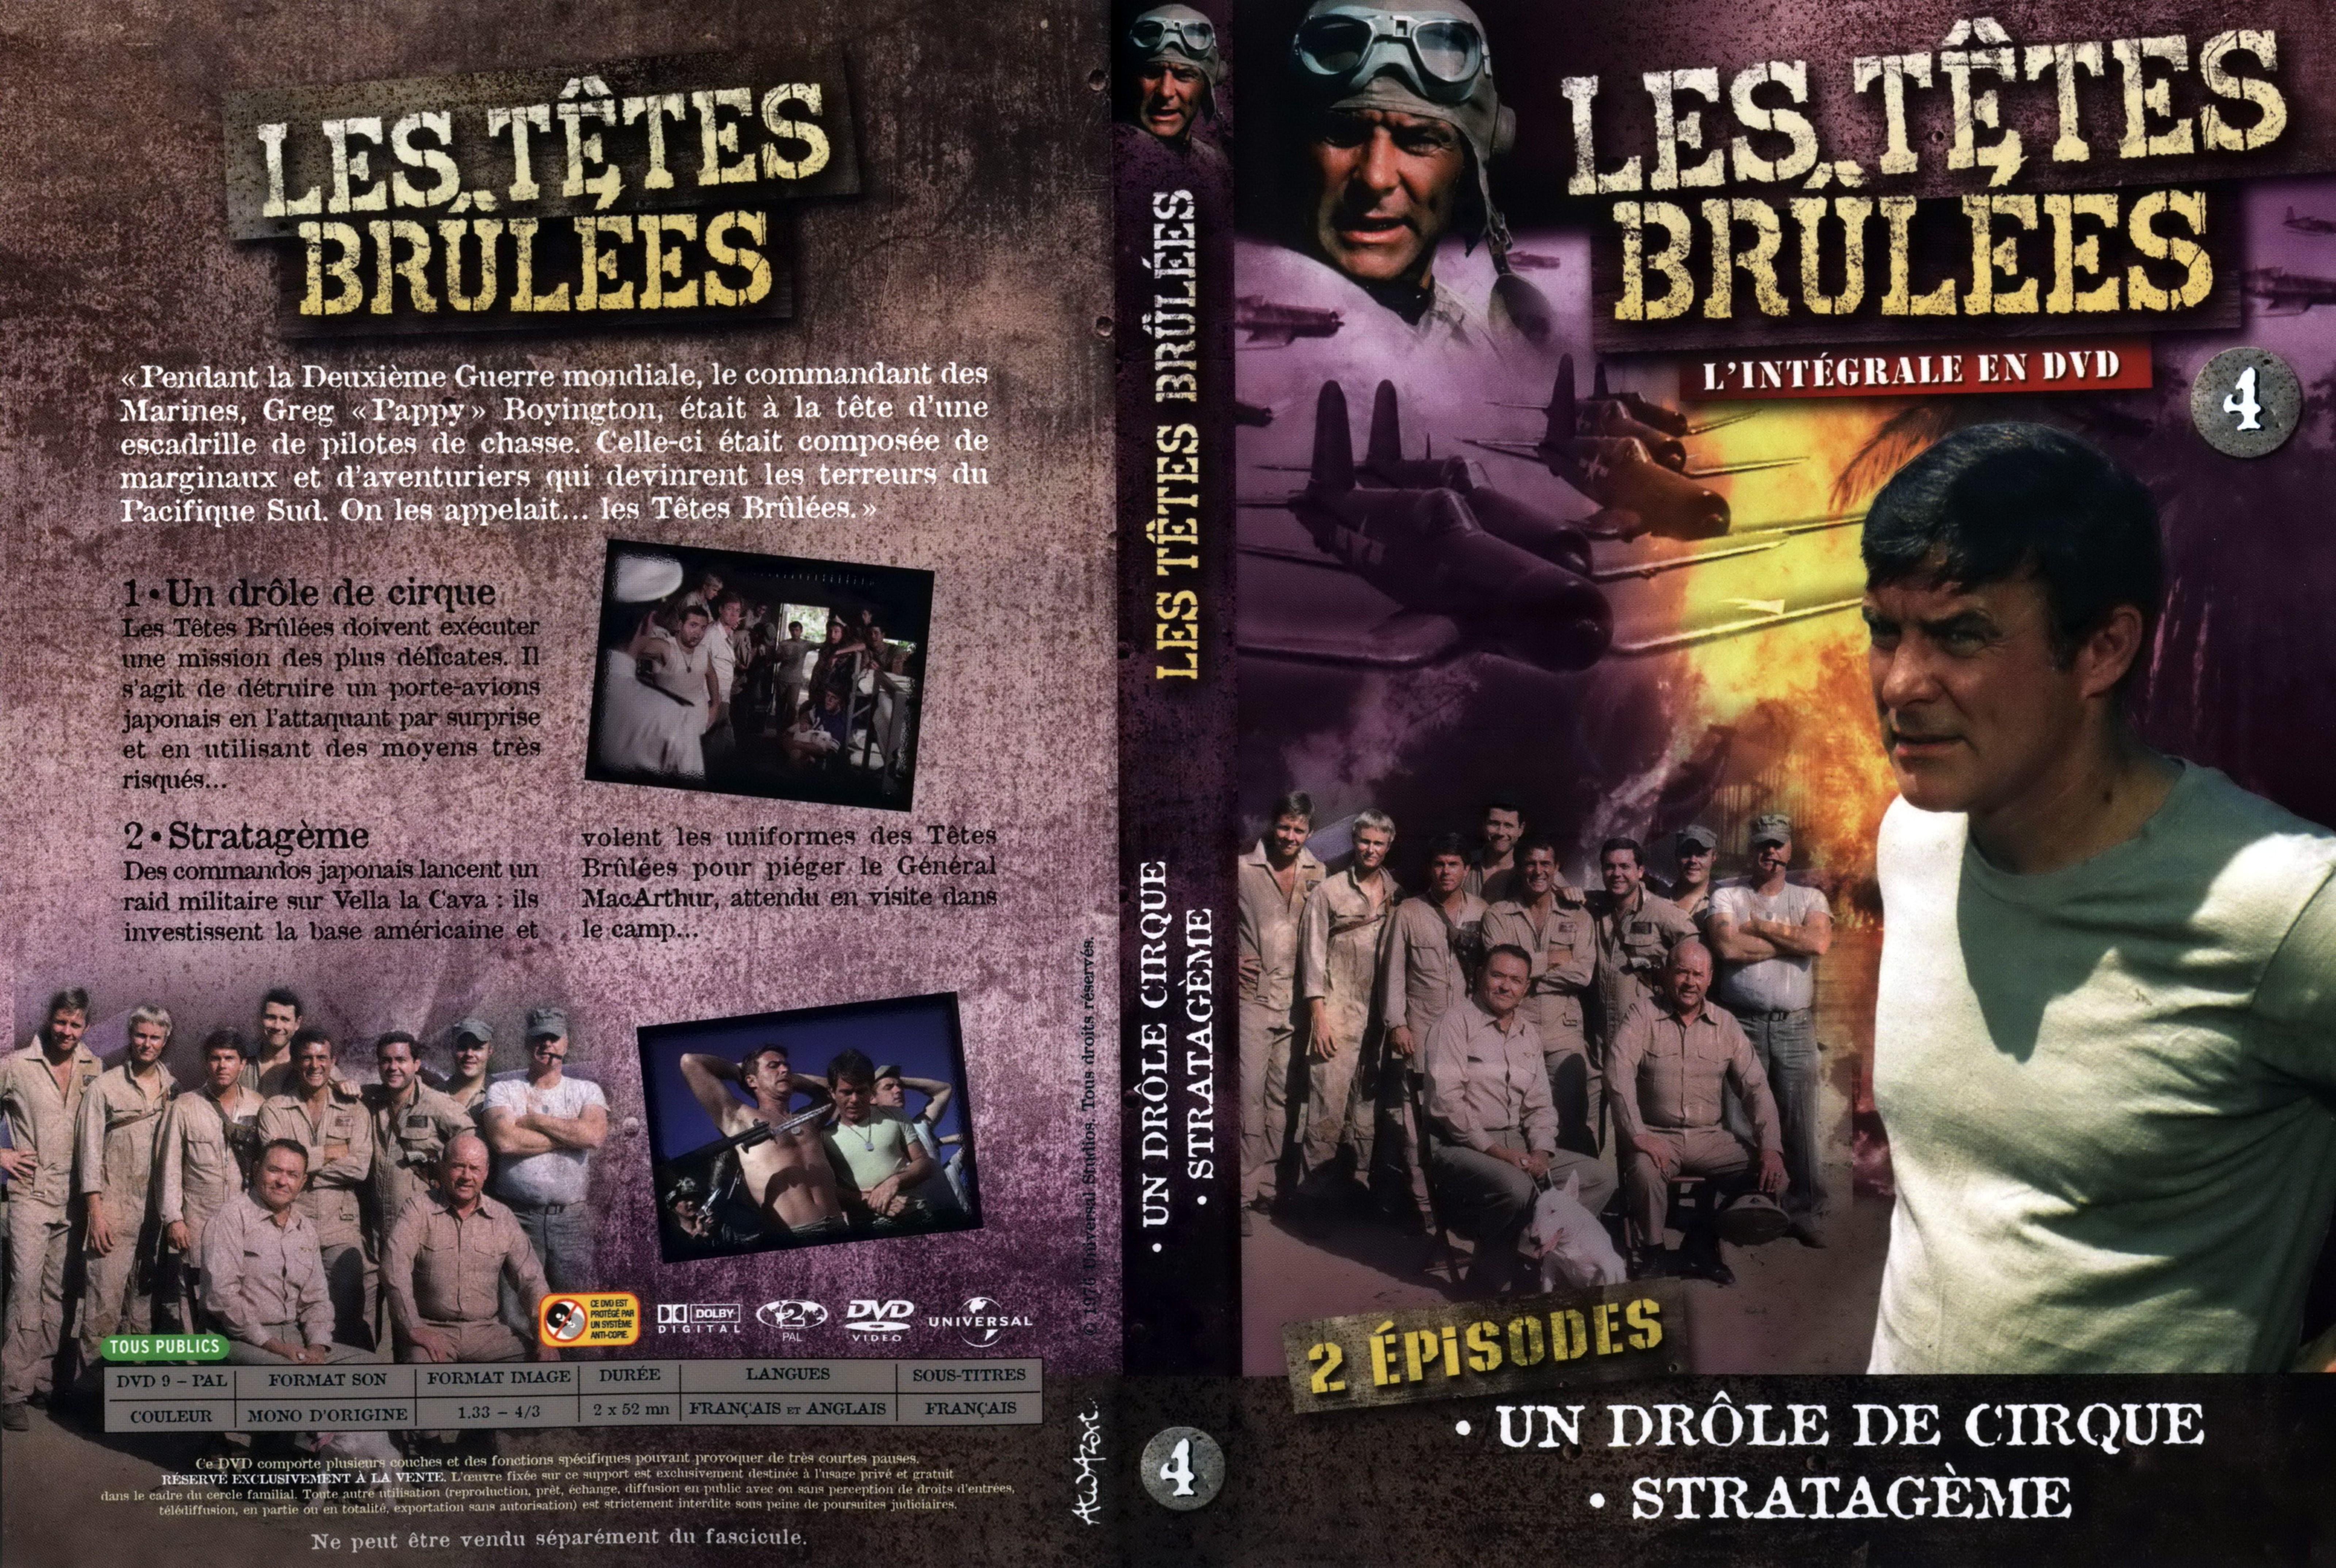 Jaquette DVD Les ttes brulees Intgrale vol 04